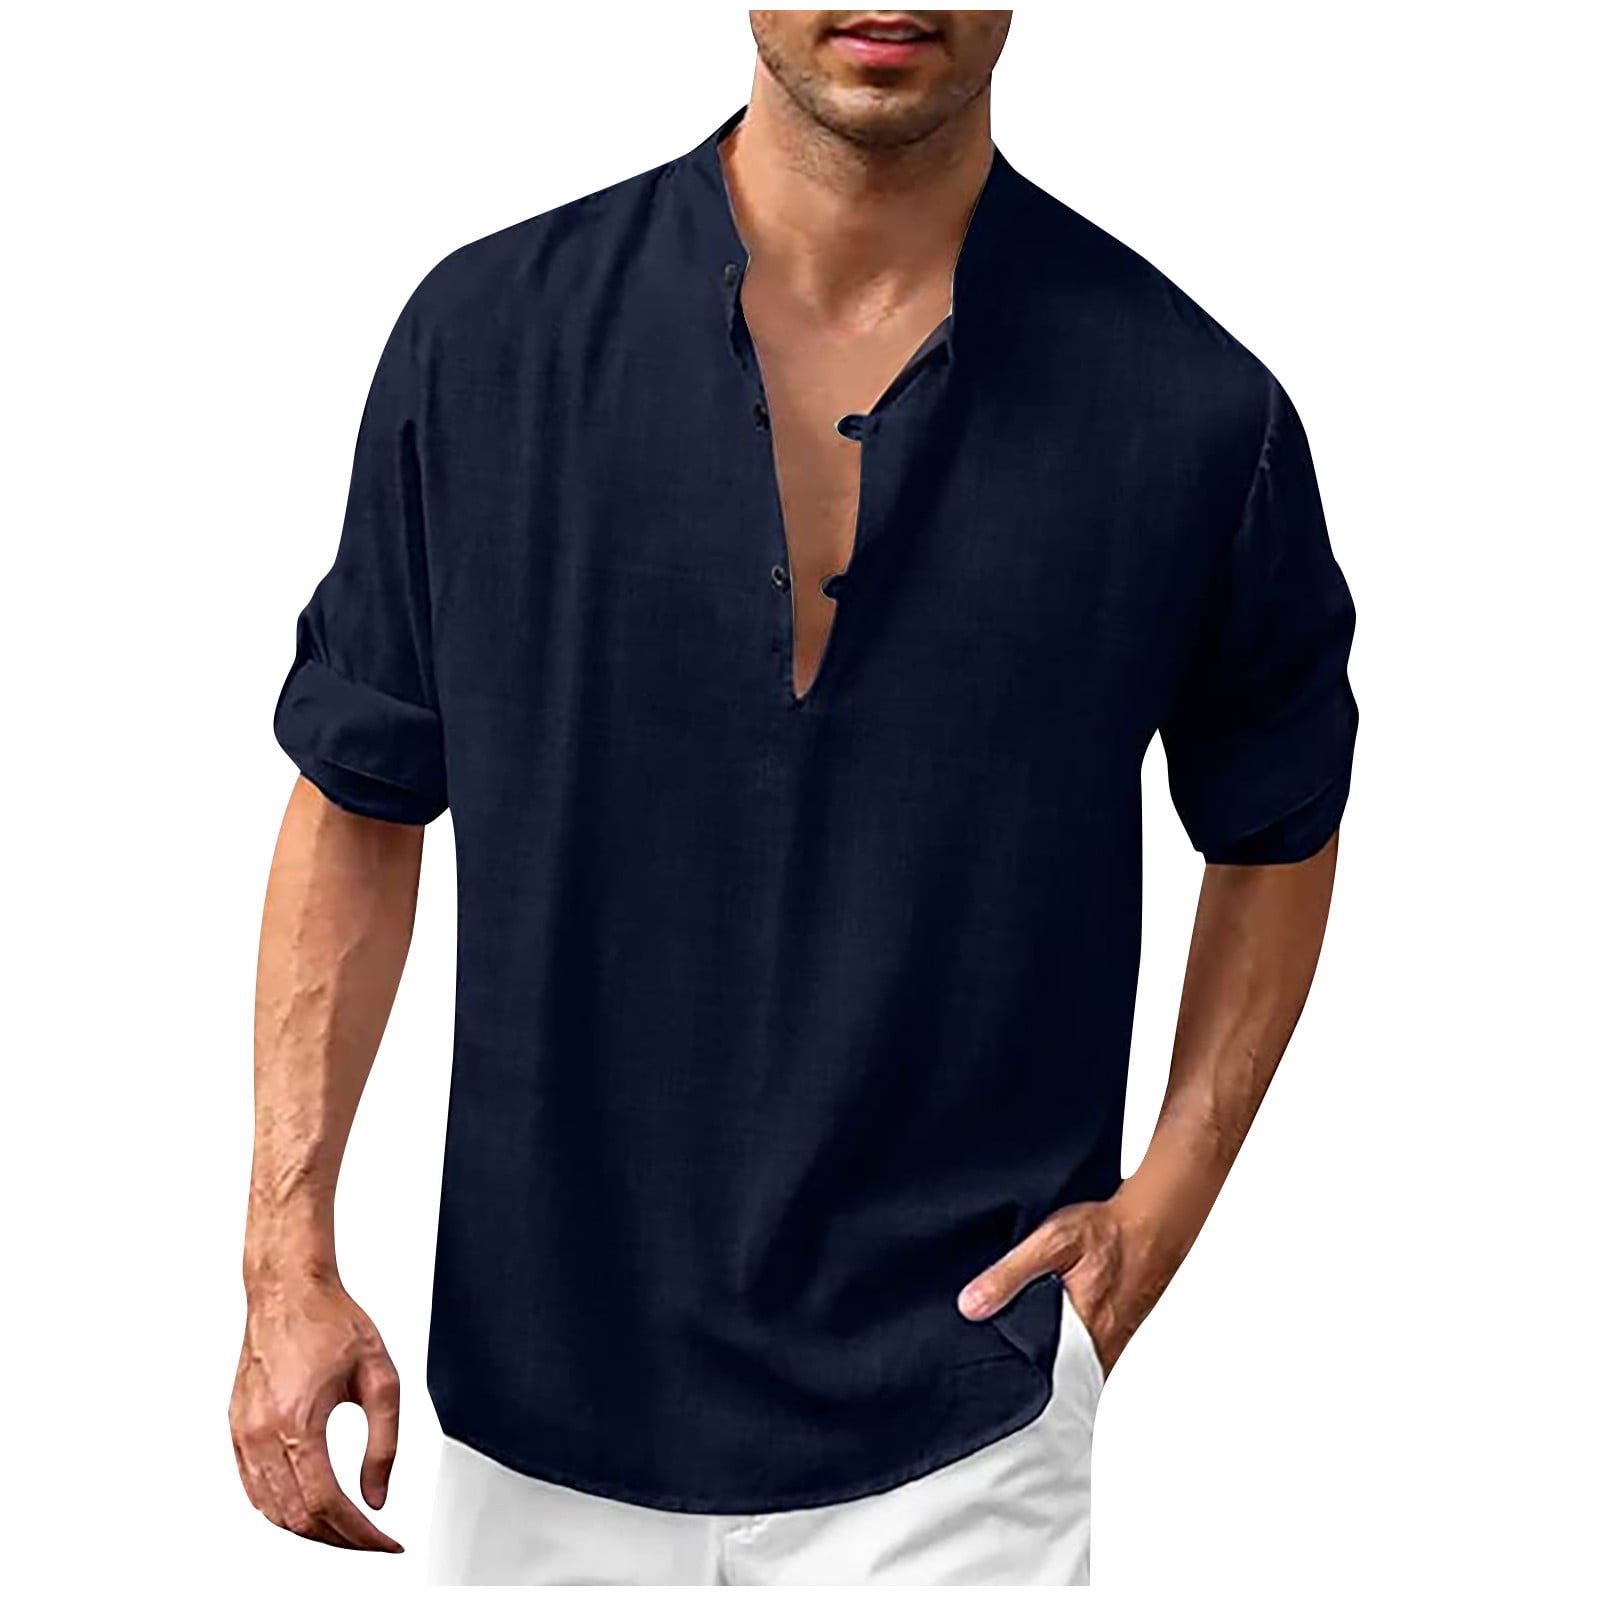 gakvbuo Cotton Linen Henley Shirts For Men Summer Tops Baggy Casual ...